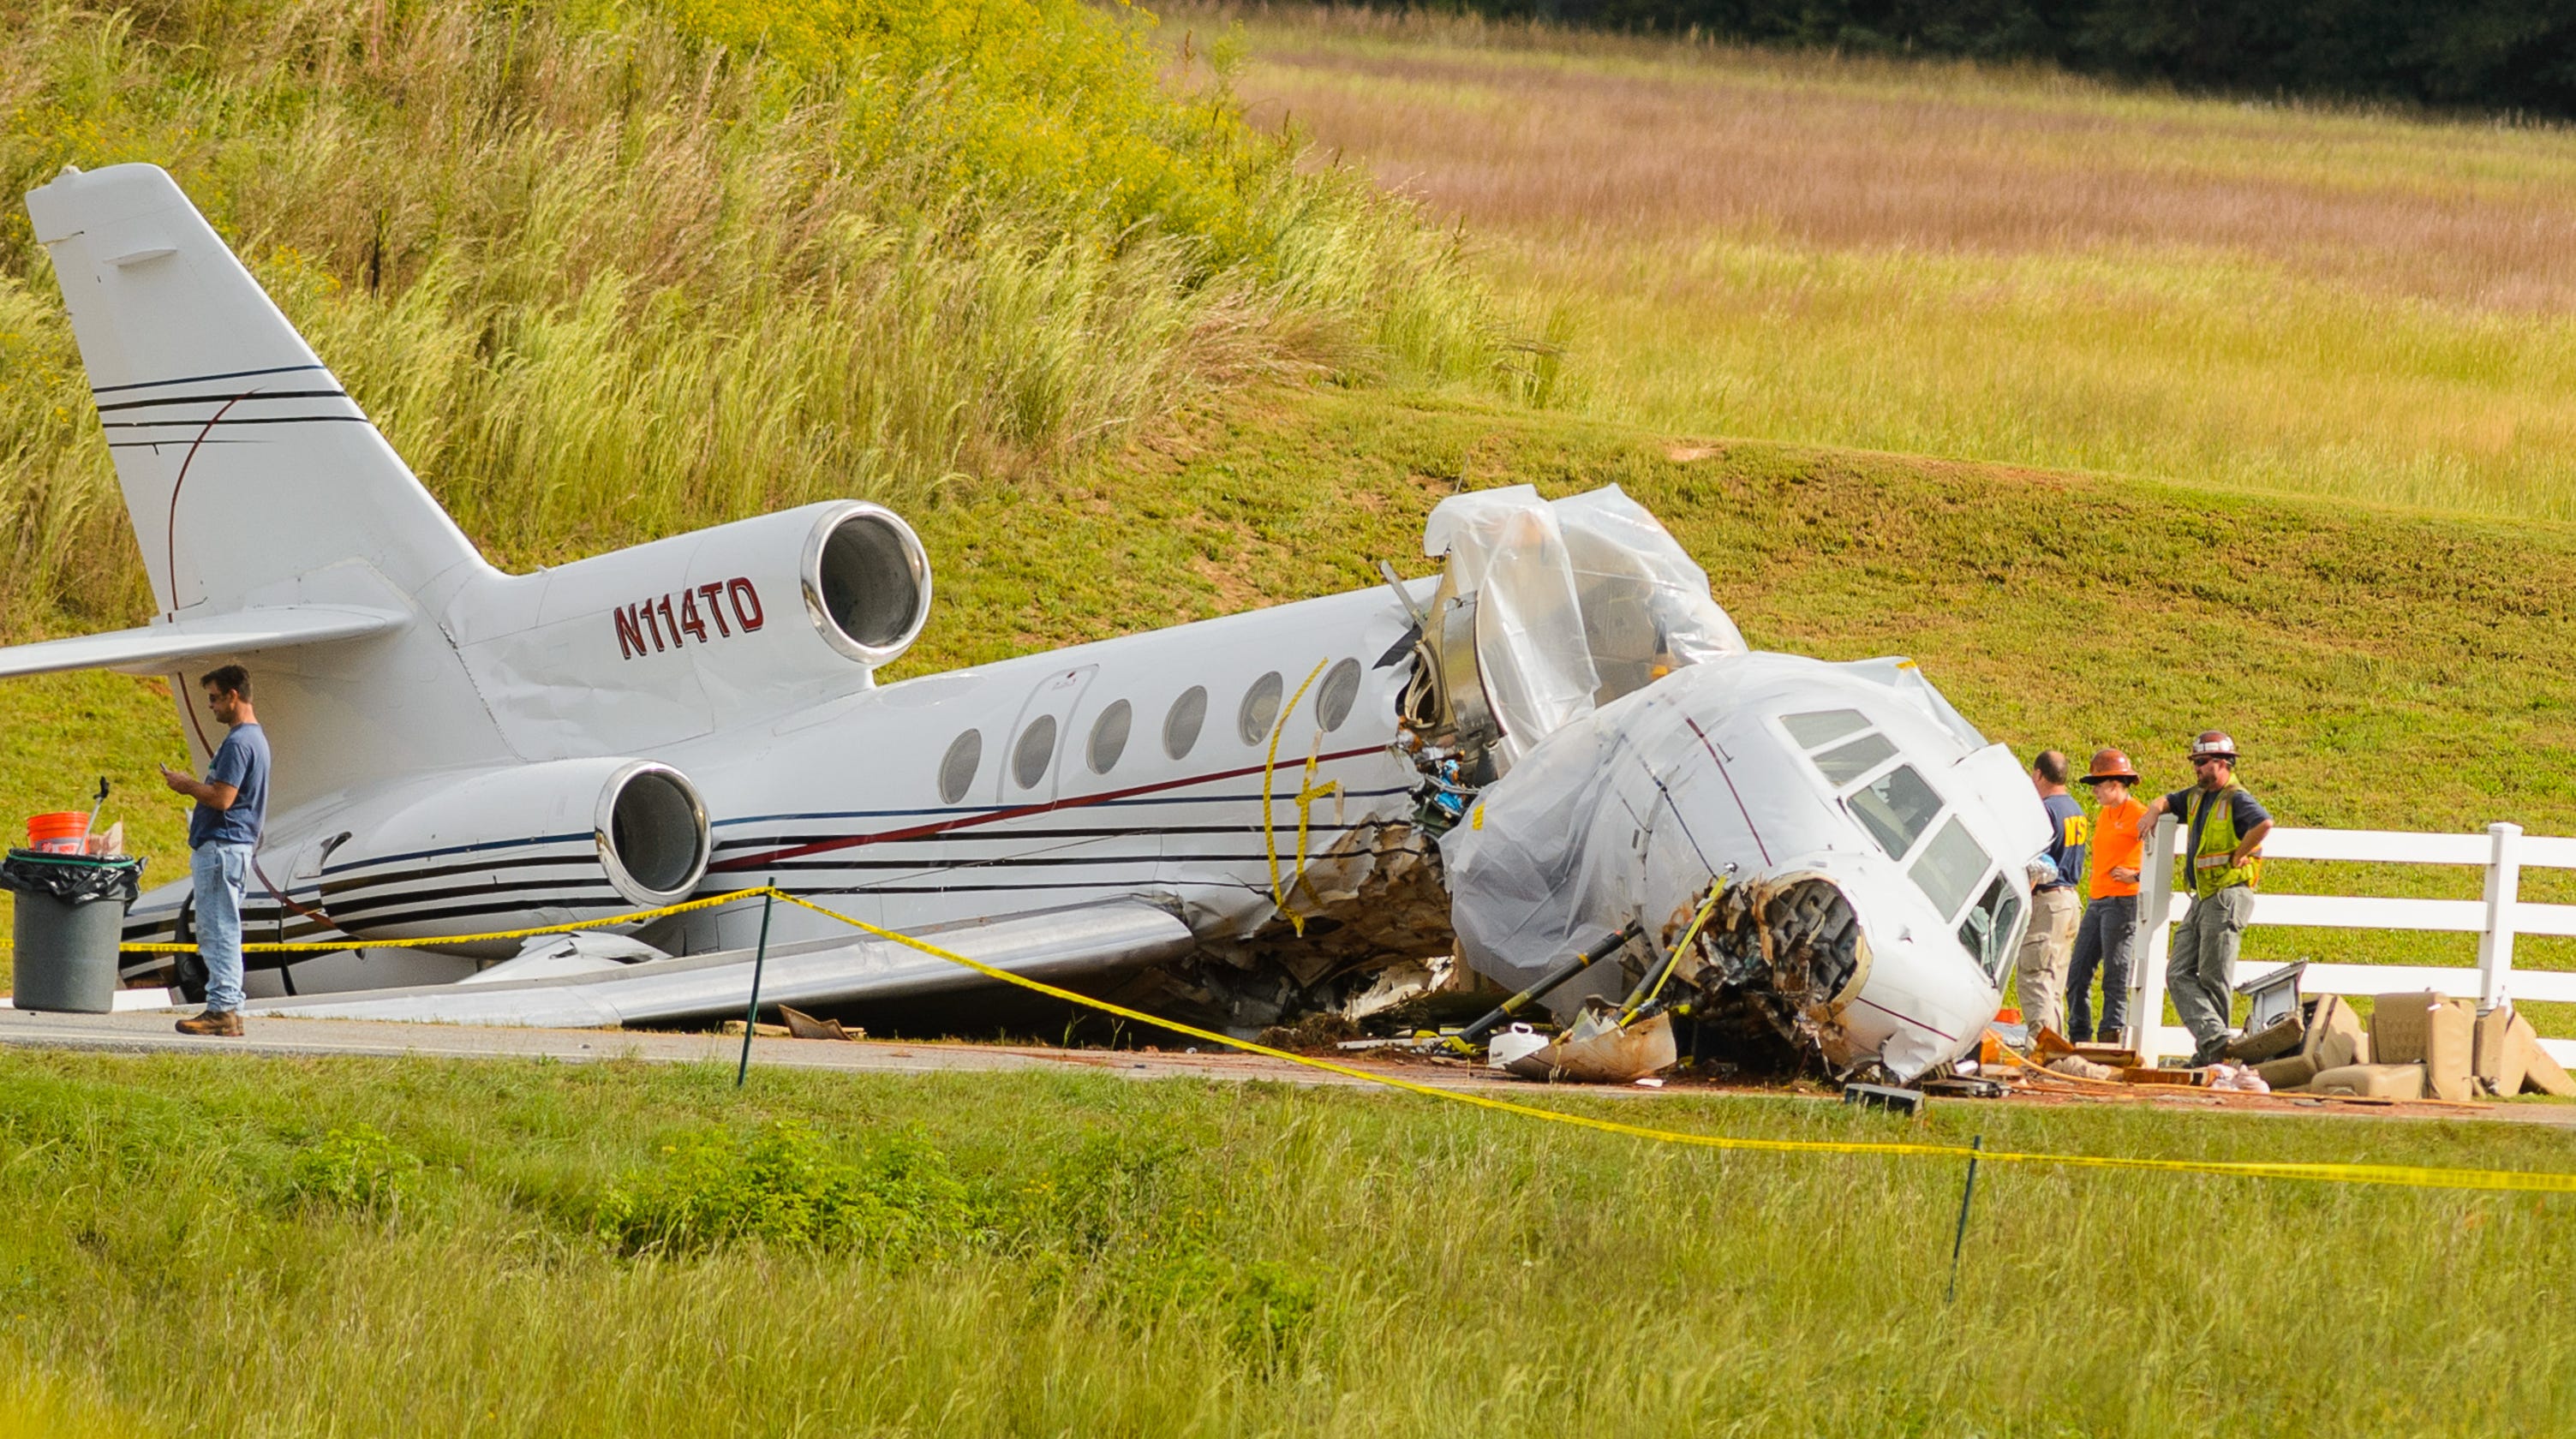 Greenville plane crash Florida CEO, spouse identified as survivors